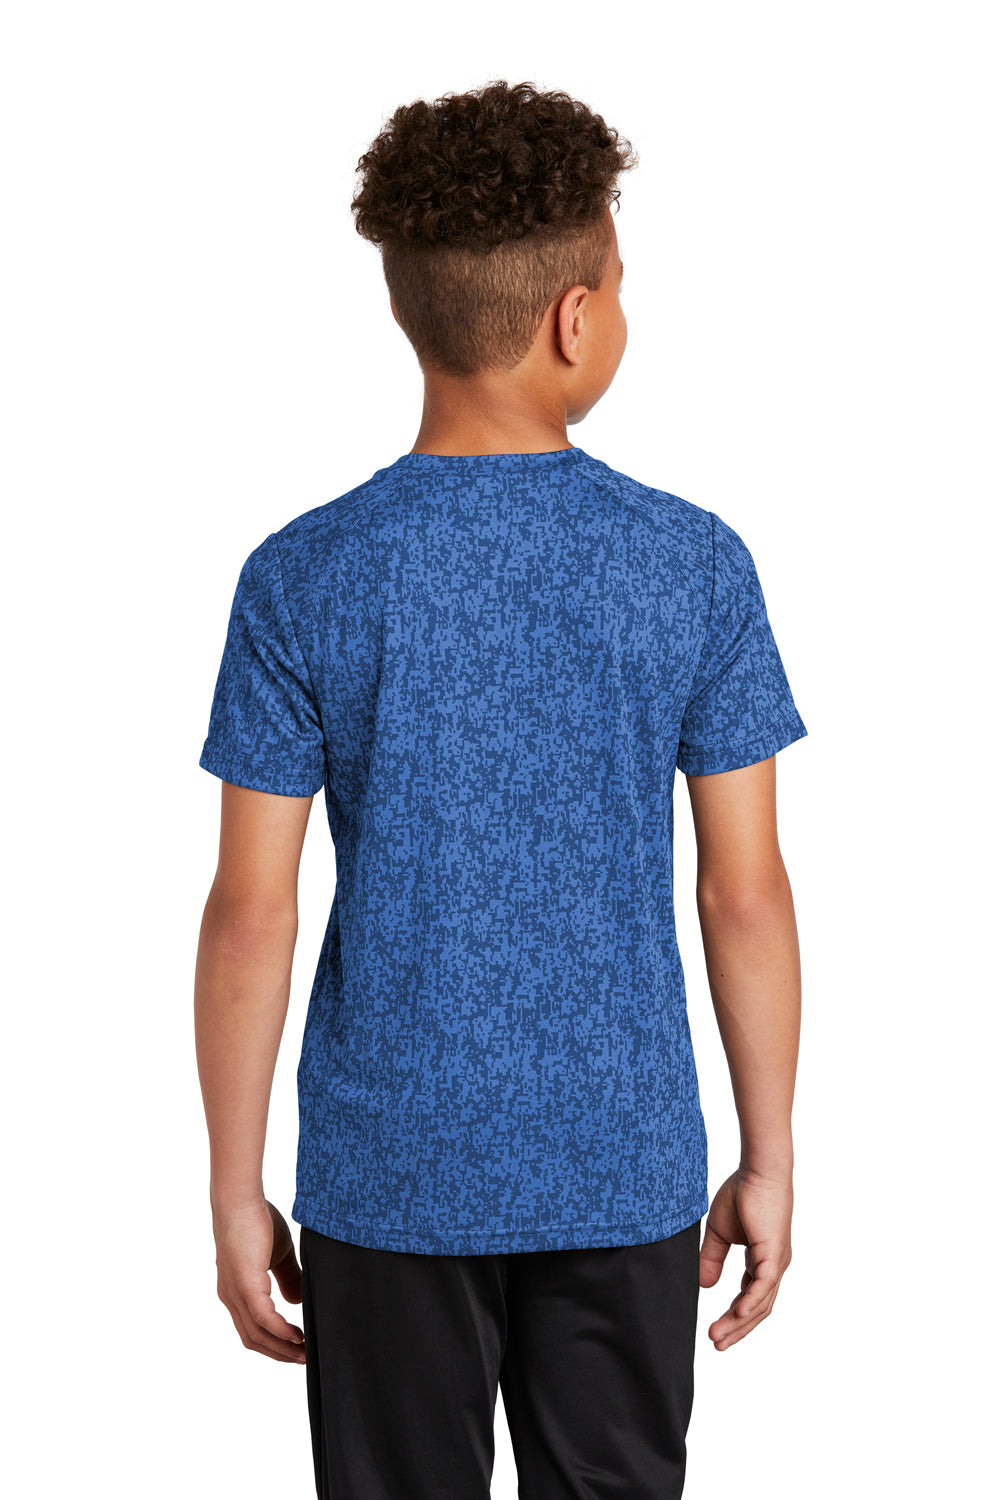 Sport-Tek Youth Digi Camo Short Sleeve Crewneck T-Shirt True Royal Blue Side